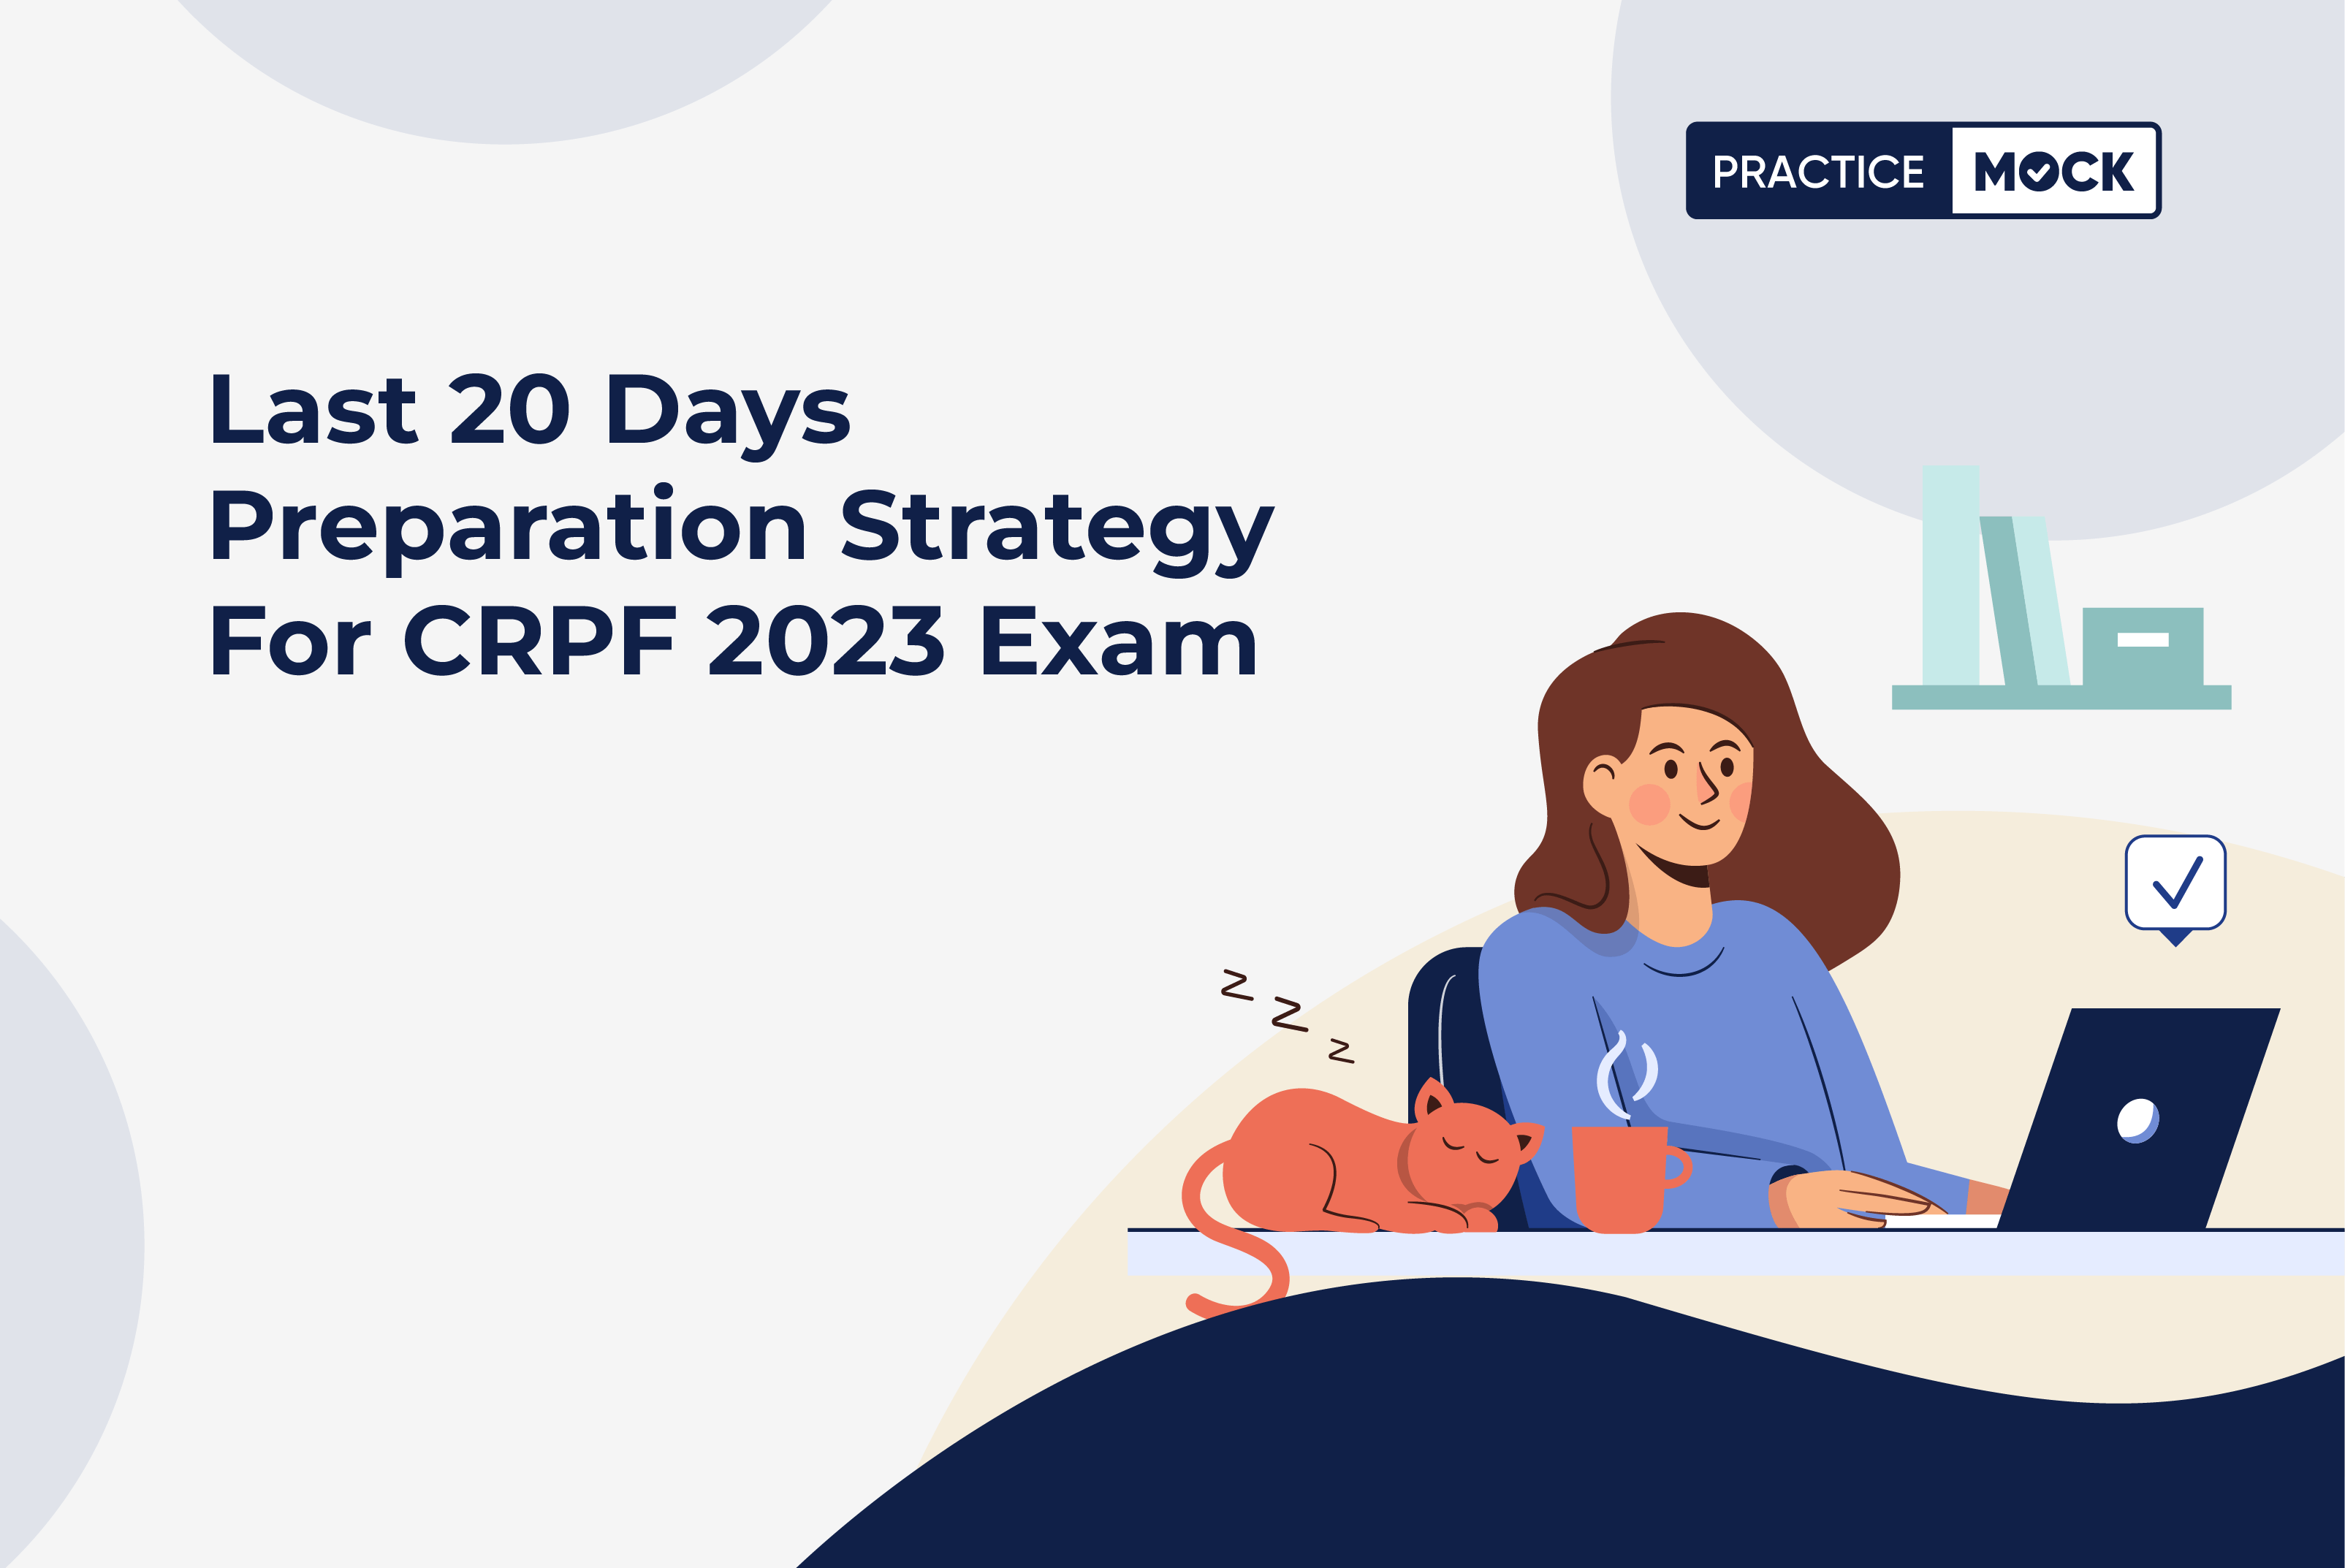 Last 20 Days Preparation Strategy for CRPF ASI/HCM 2023 Exam